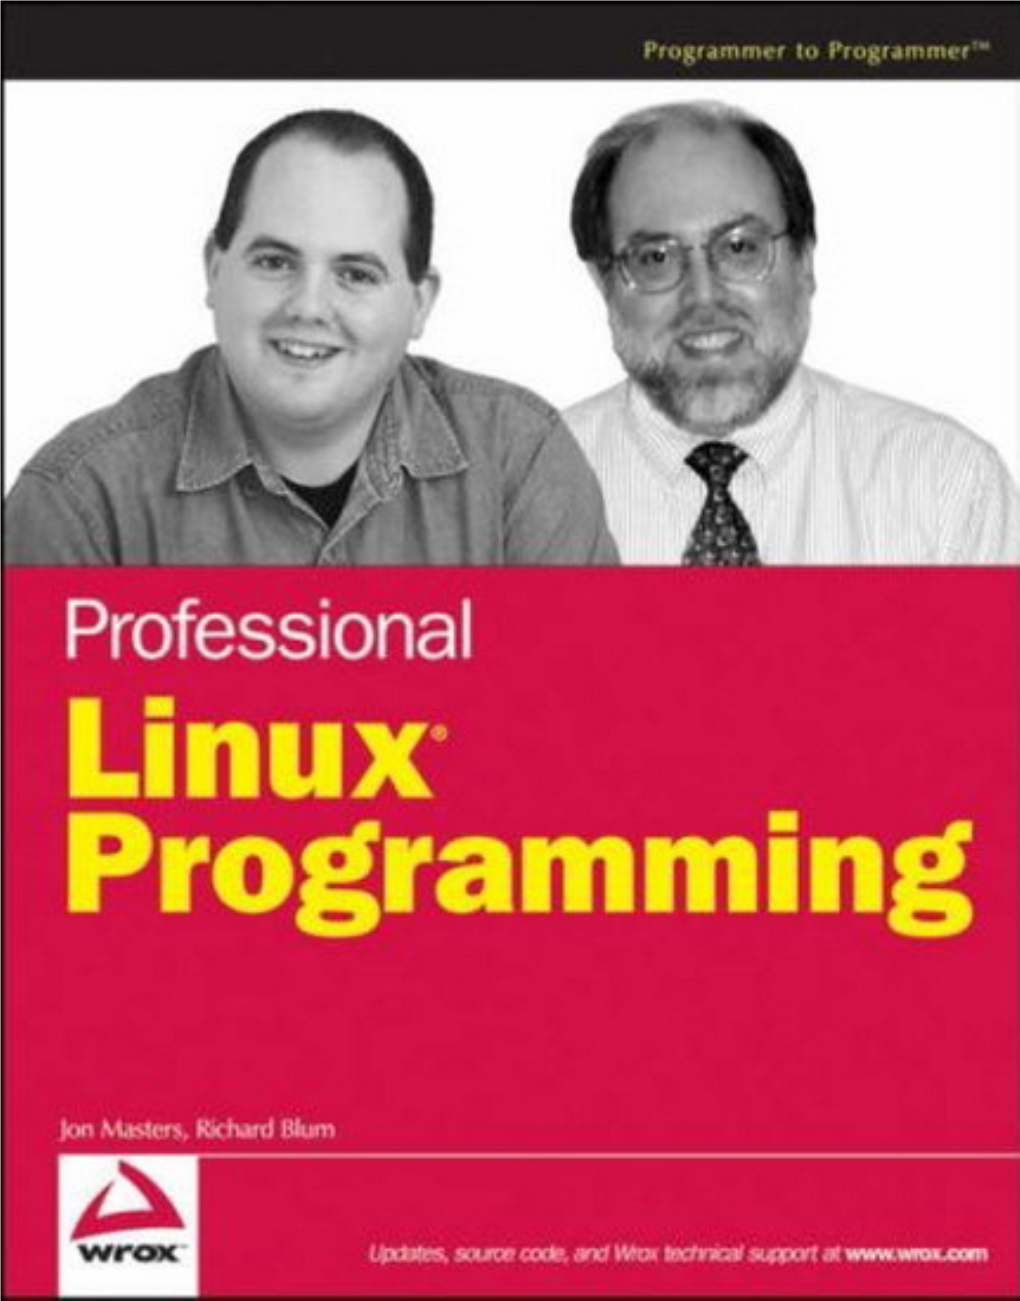 Professional Linux Programming / Jon Masters, Richard Blum